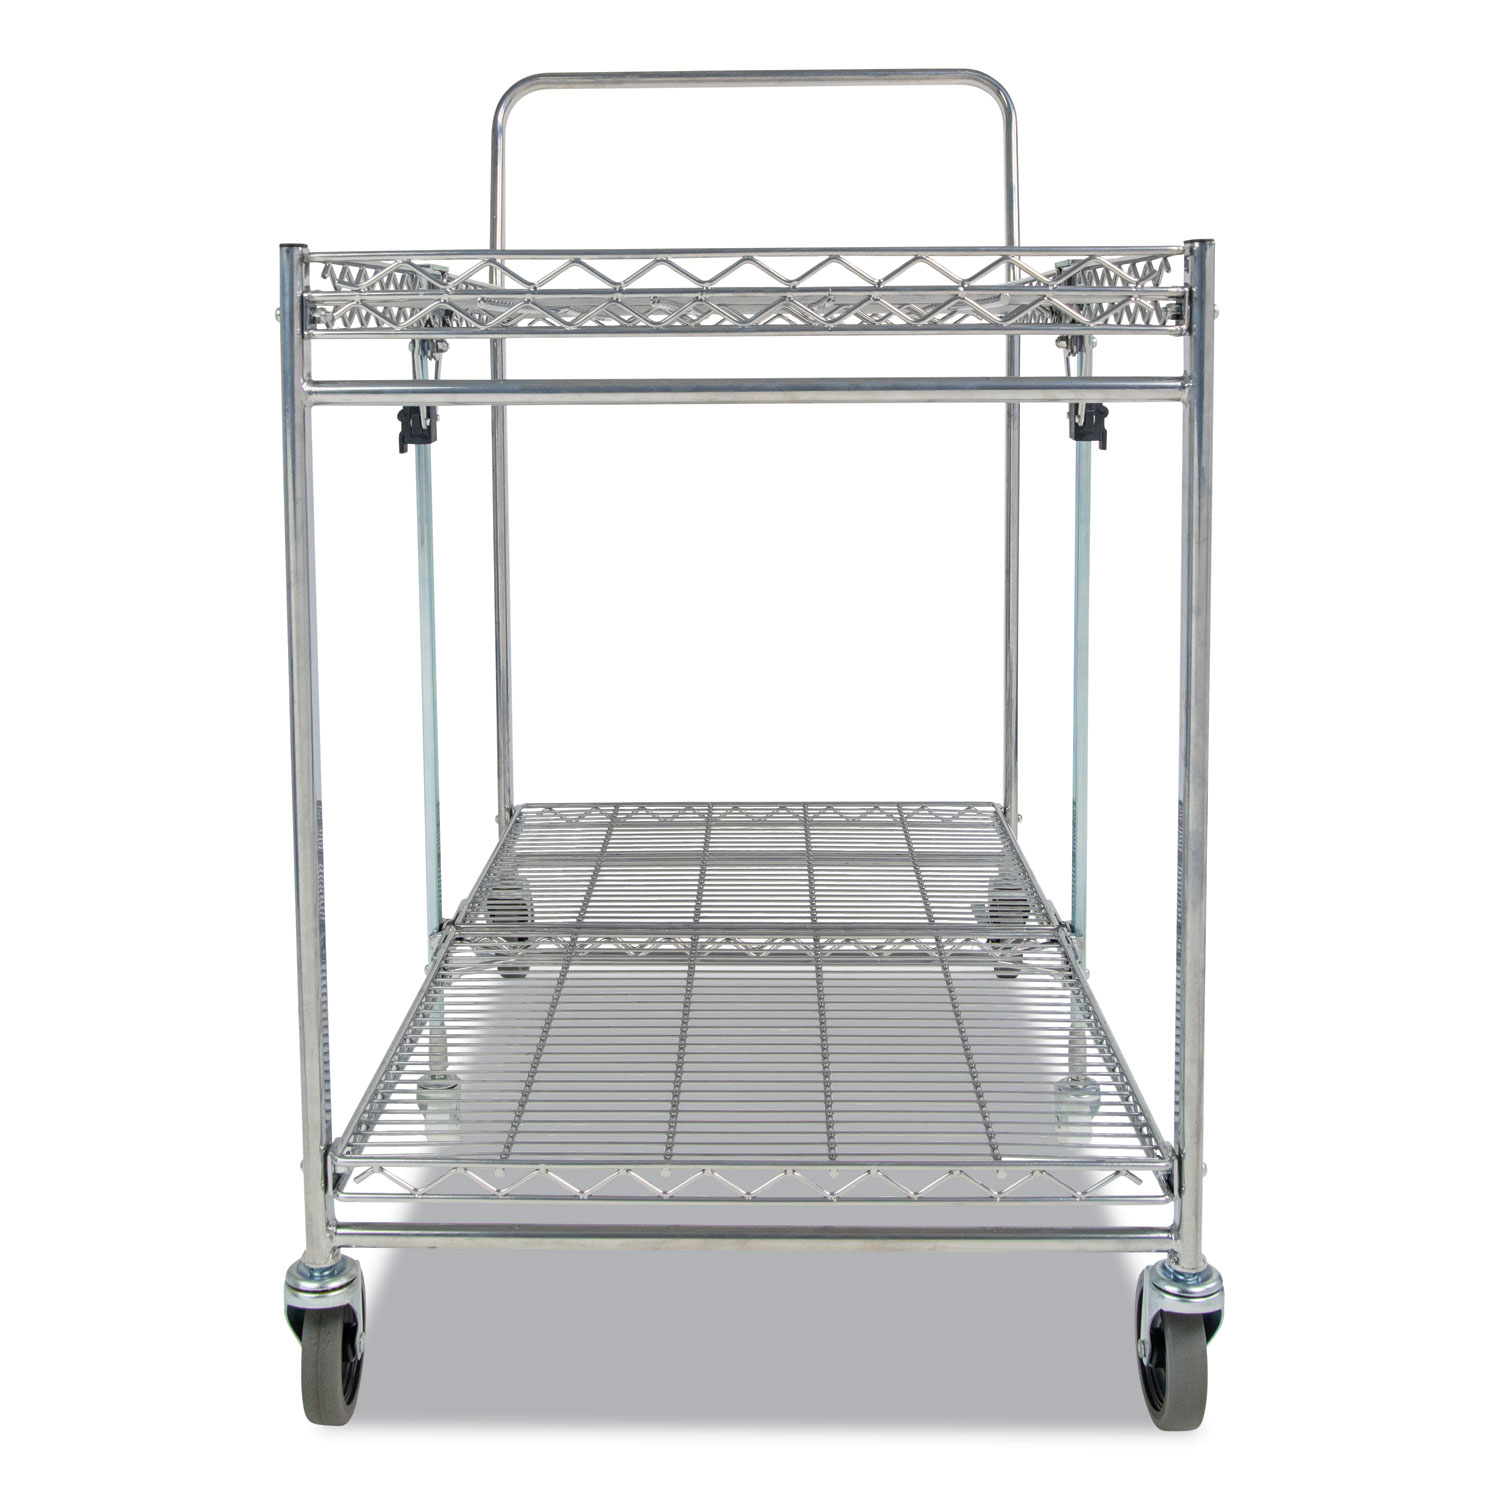 Image of Stowaway Folding Carts, 2 Shelves, 35w x 37.25d x 22h, Chrome, 250 lb Capacity